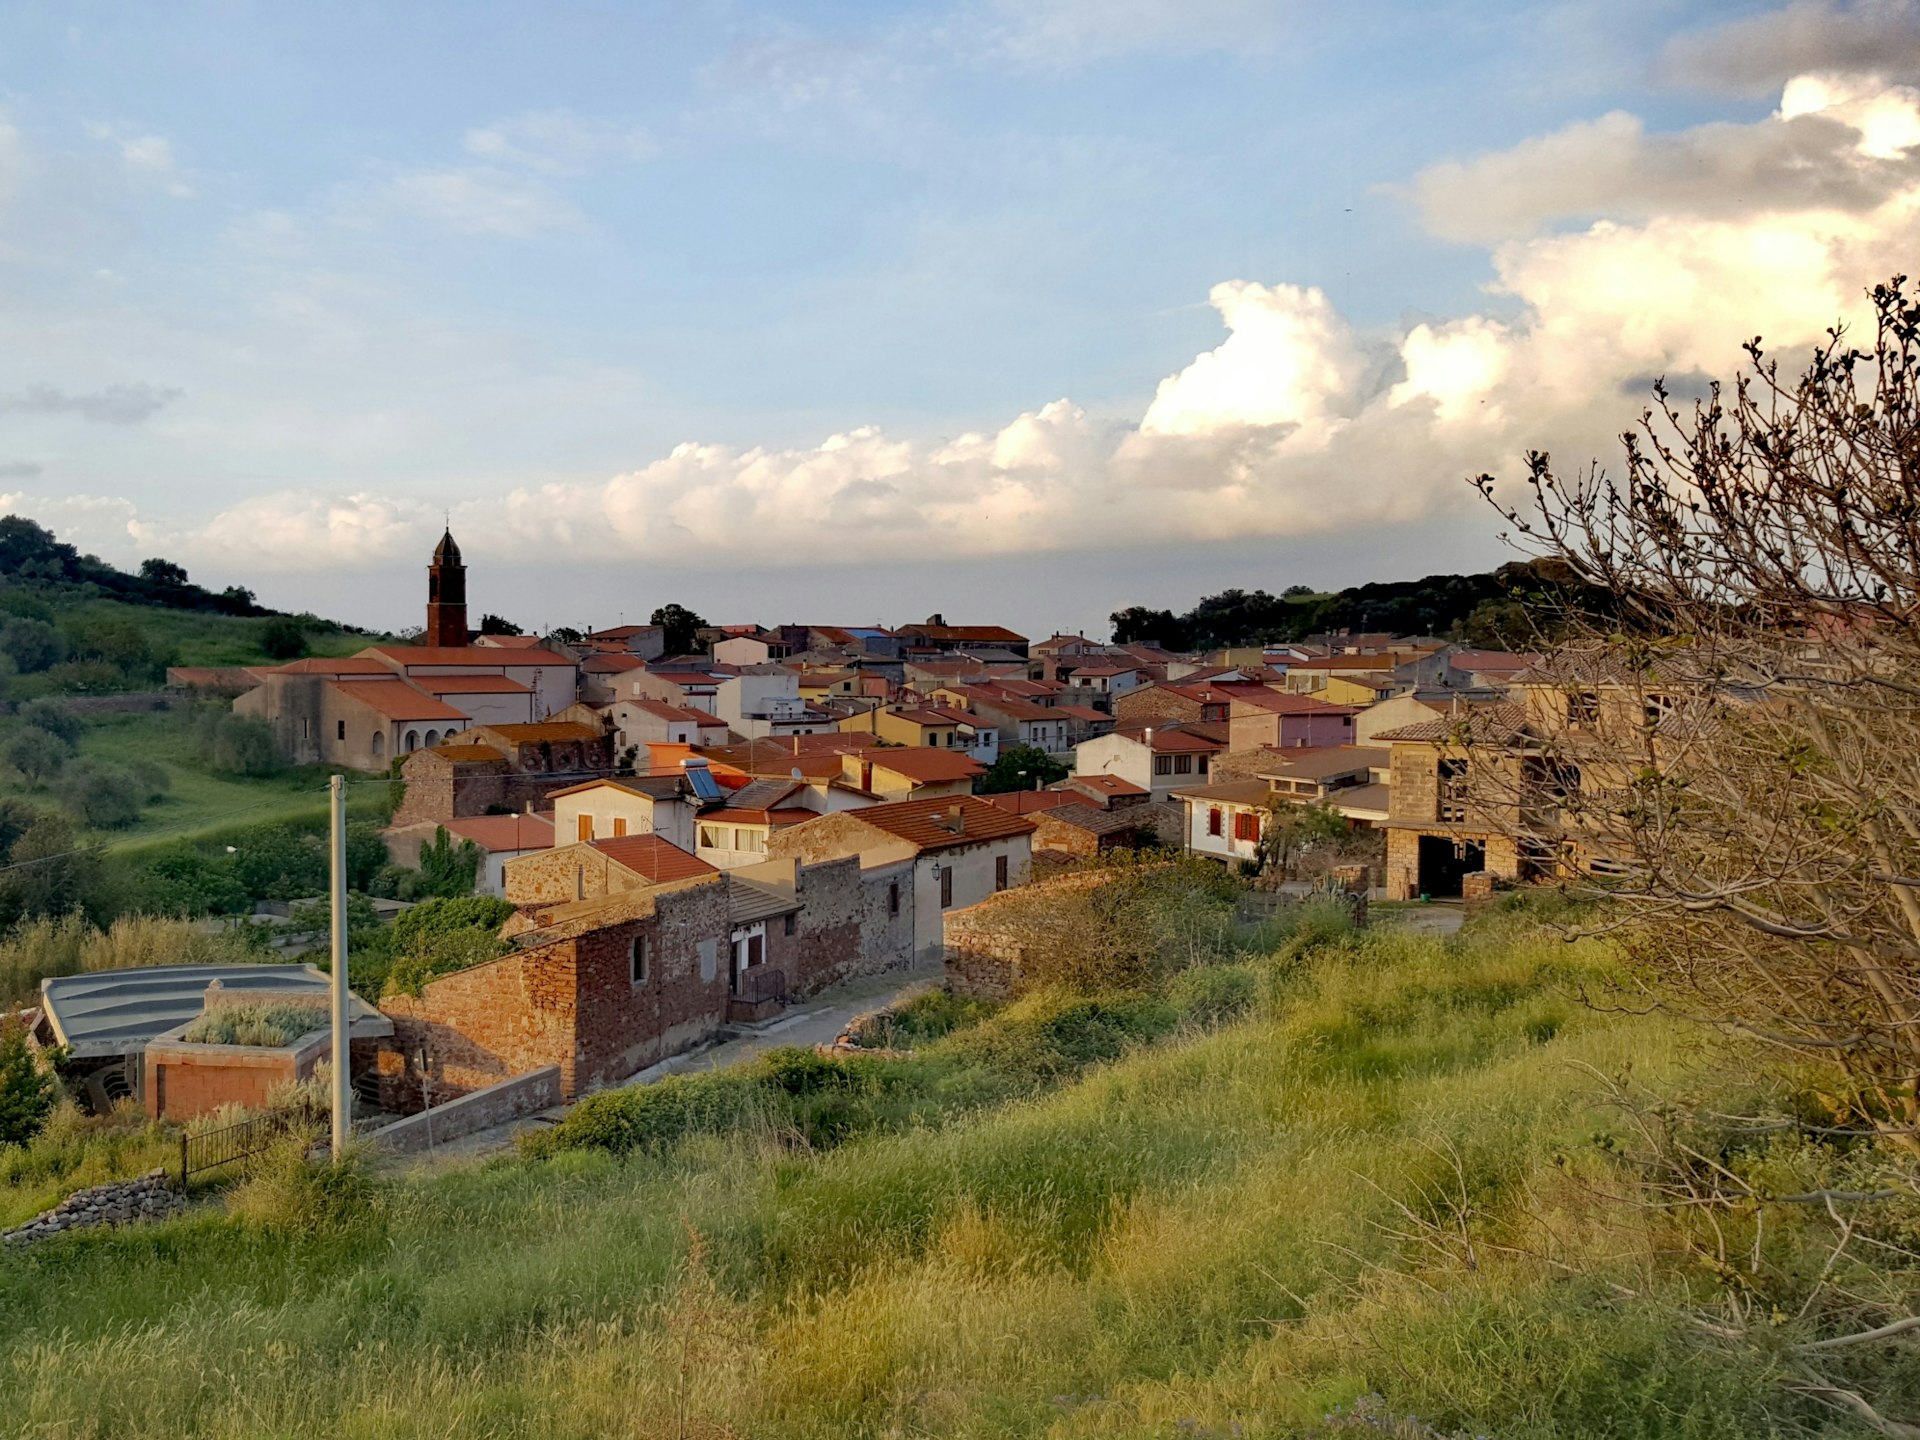 A view of the rural village of Banari, Sardinia, Italy